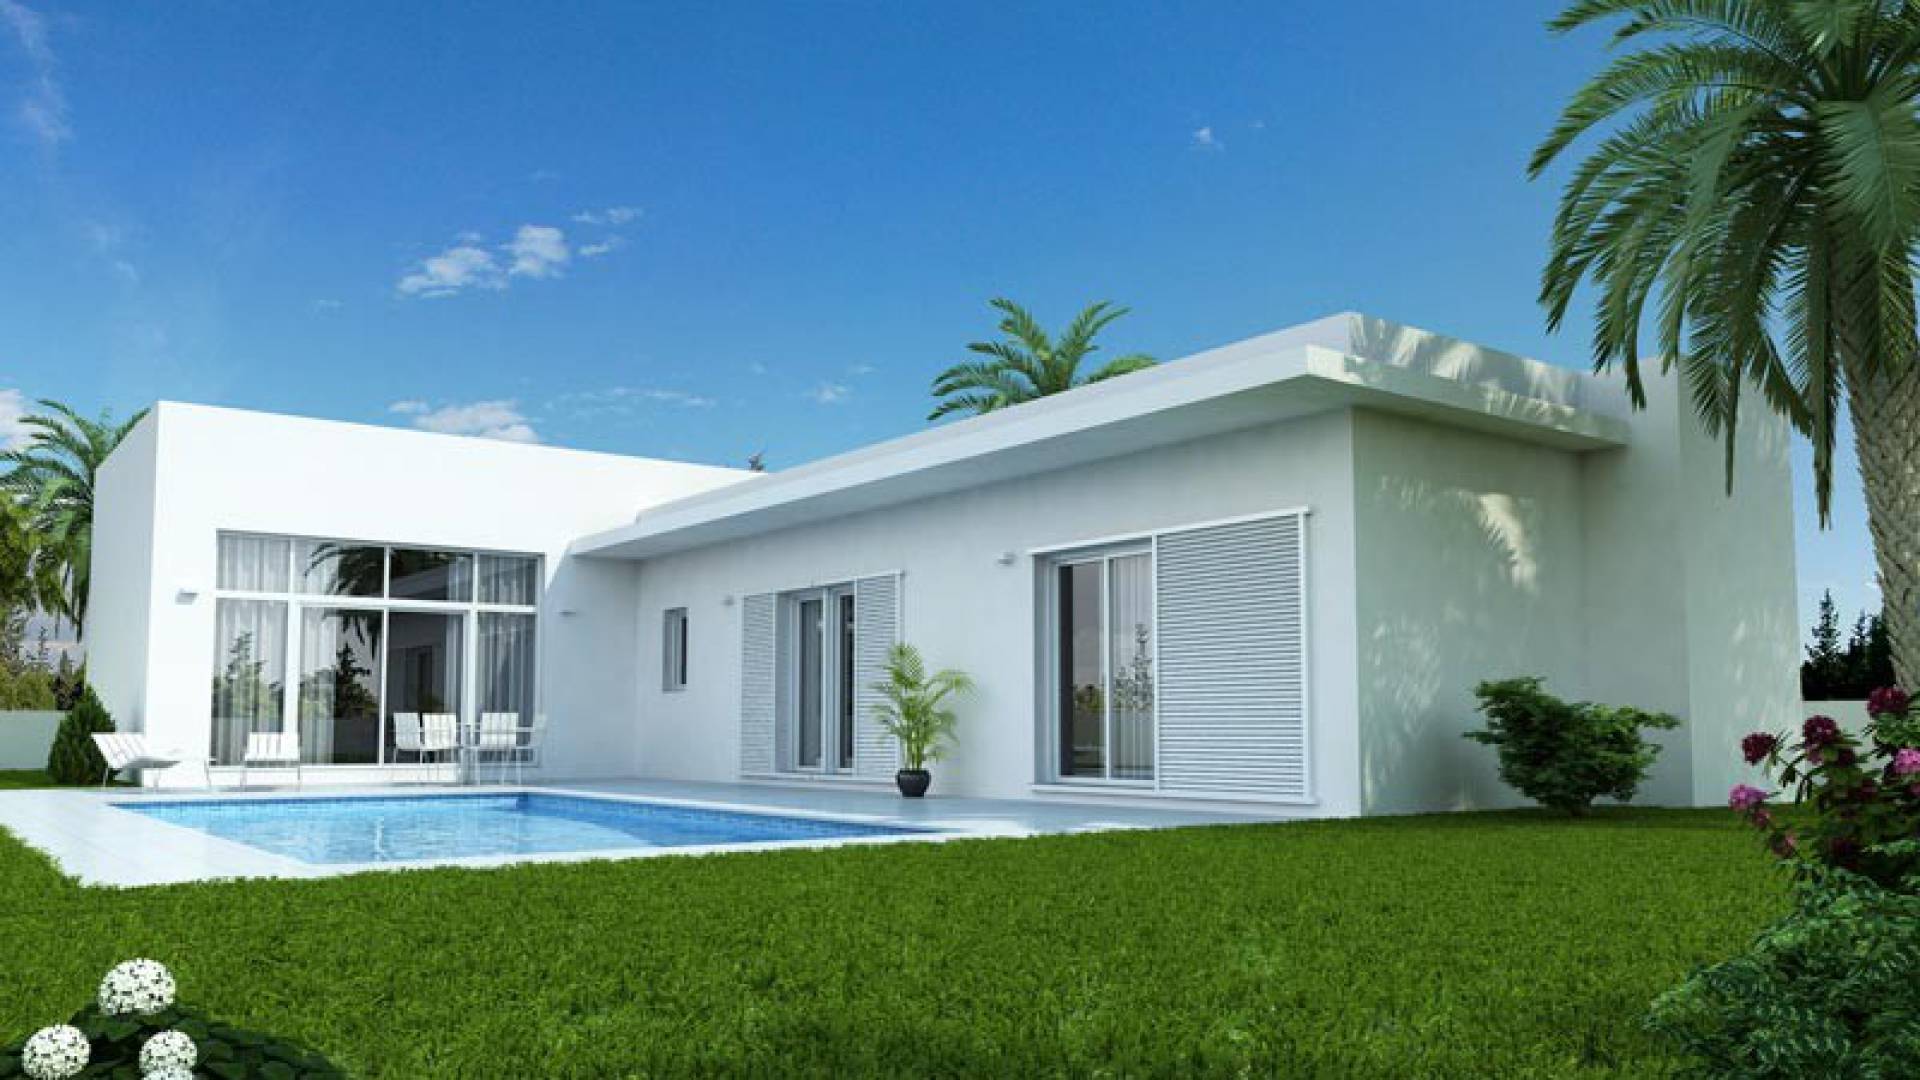 for sale,villa blanca,marina villas,lamarina,costa blanca,offplan,op023-pool